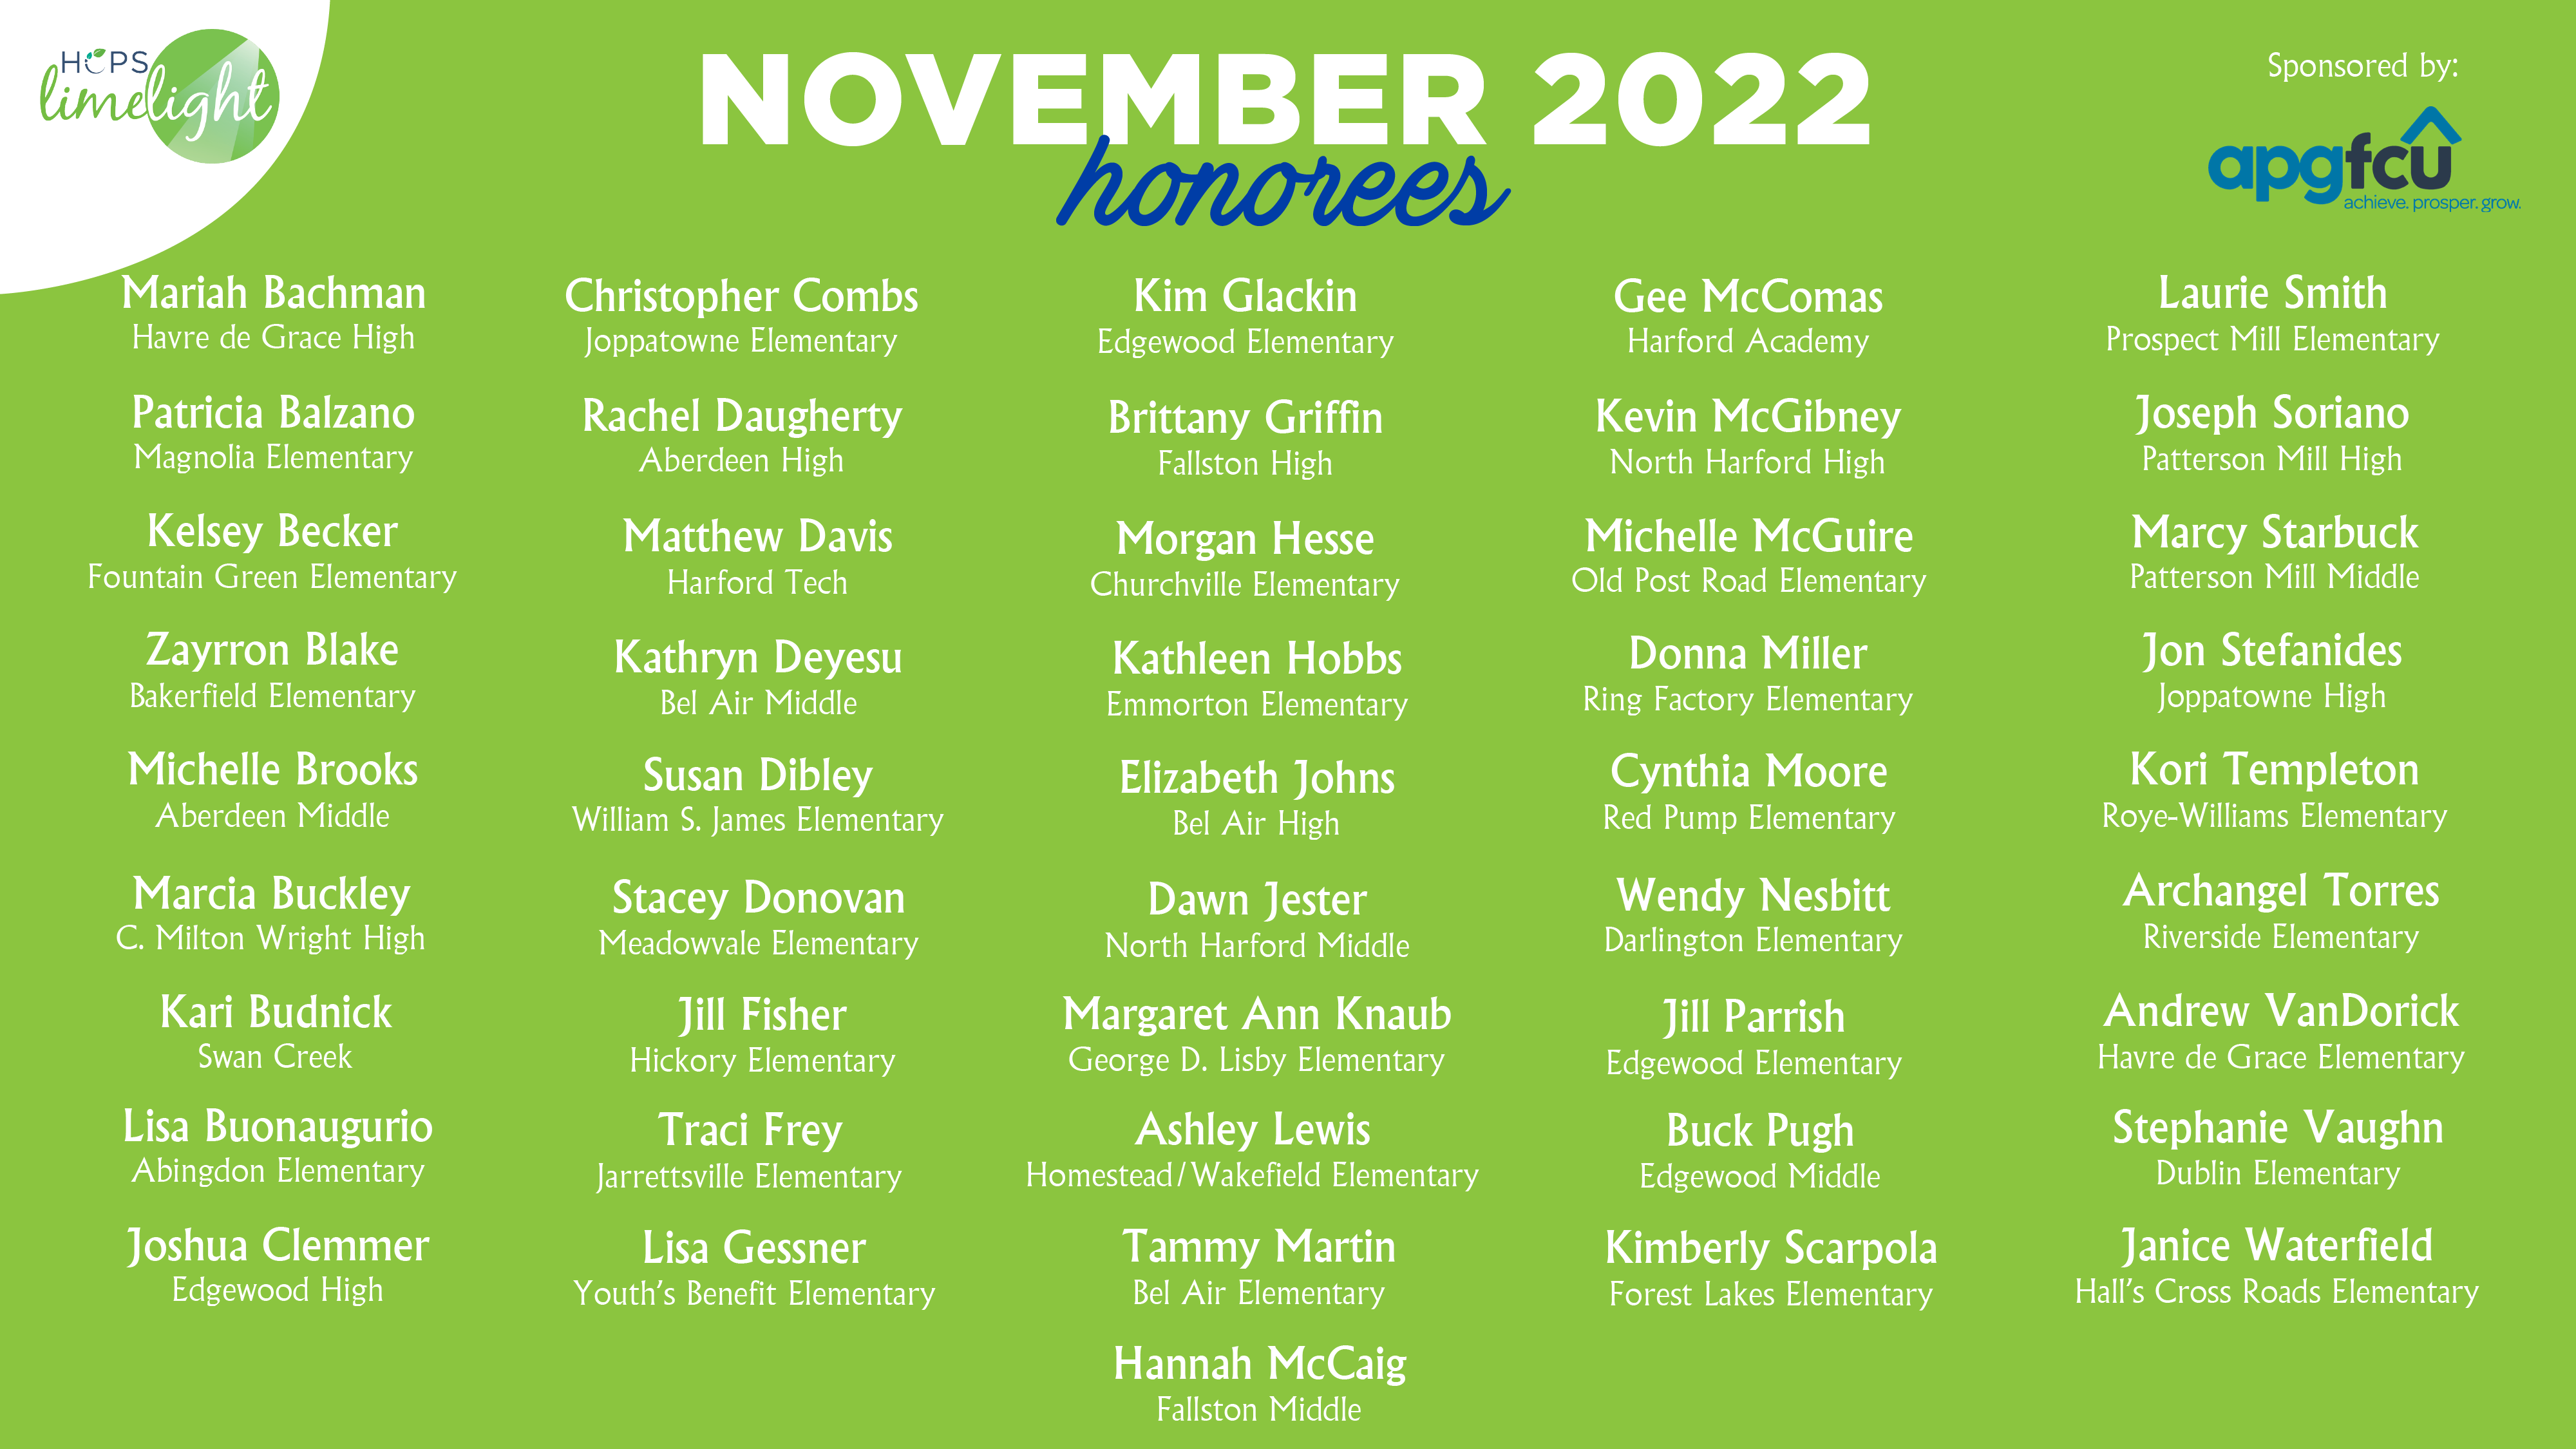 HCPS Limelight Honorees - November 2022